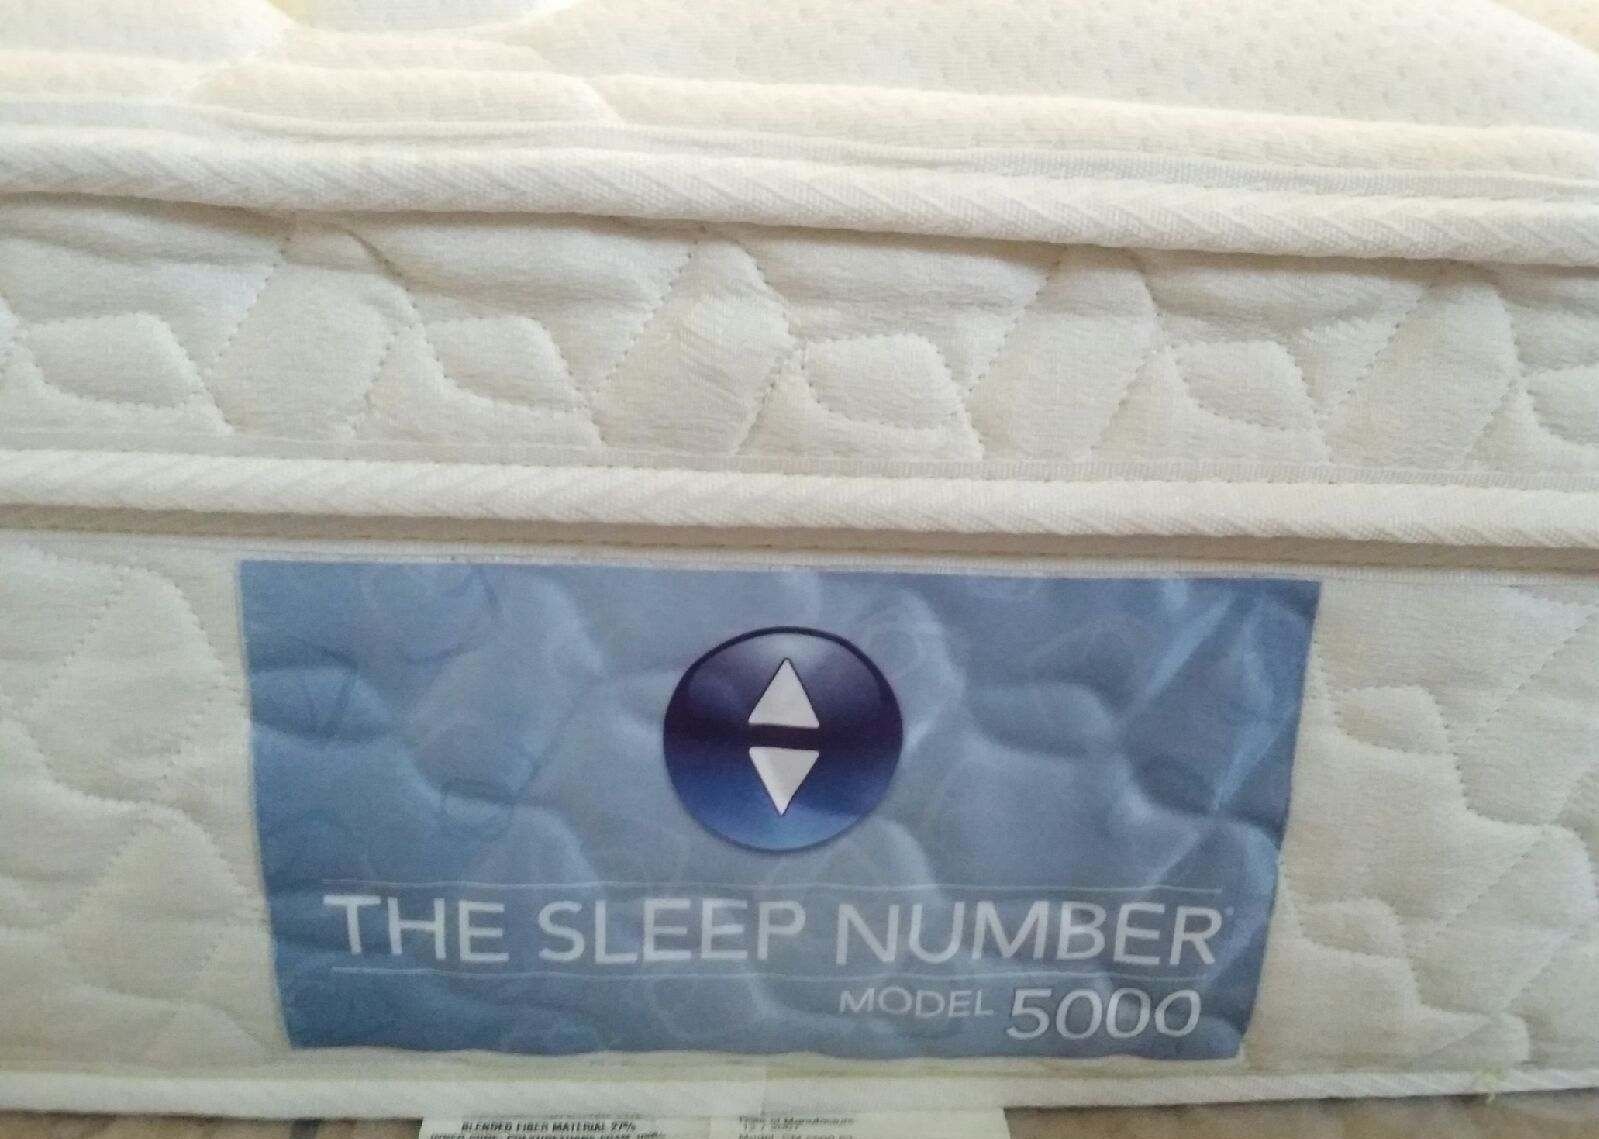 5000 series sleep number mattress